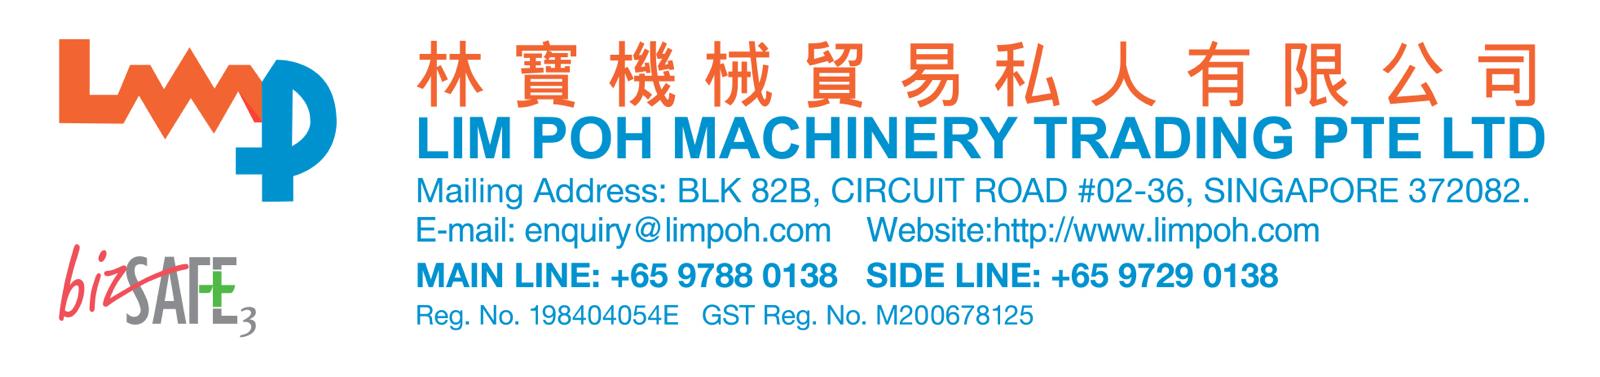 Lim Poh Machinery Trading Pte Ltd.